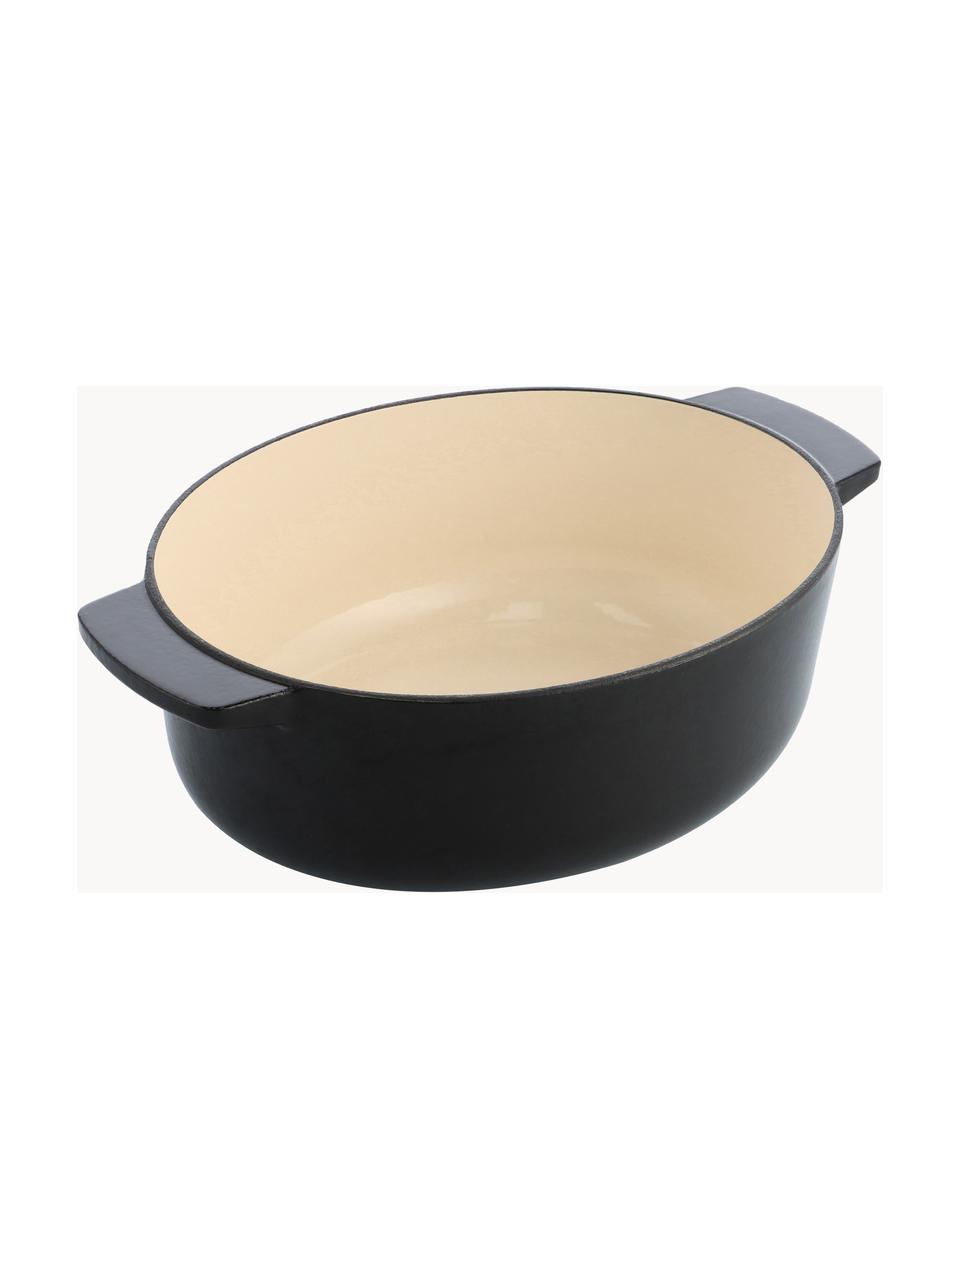 Cocotte ovale con rivestimento antiaderente Doelle, Ghisa con rivestimento antiaderente in ceramica, Nero, Lung. 40 x Larg. 29 x Alt. 16 cm